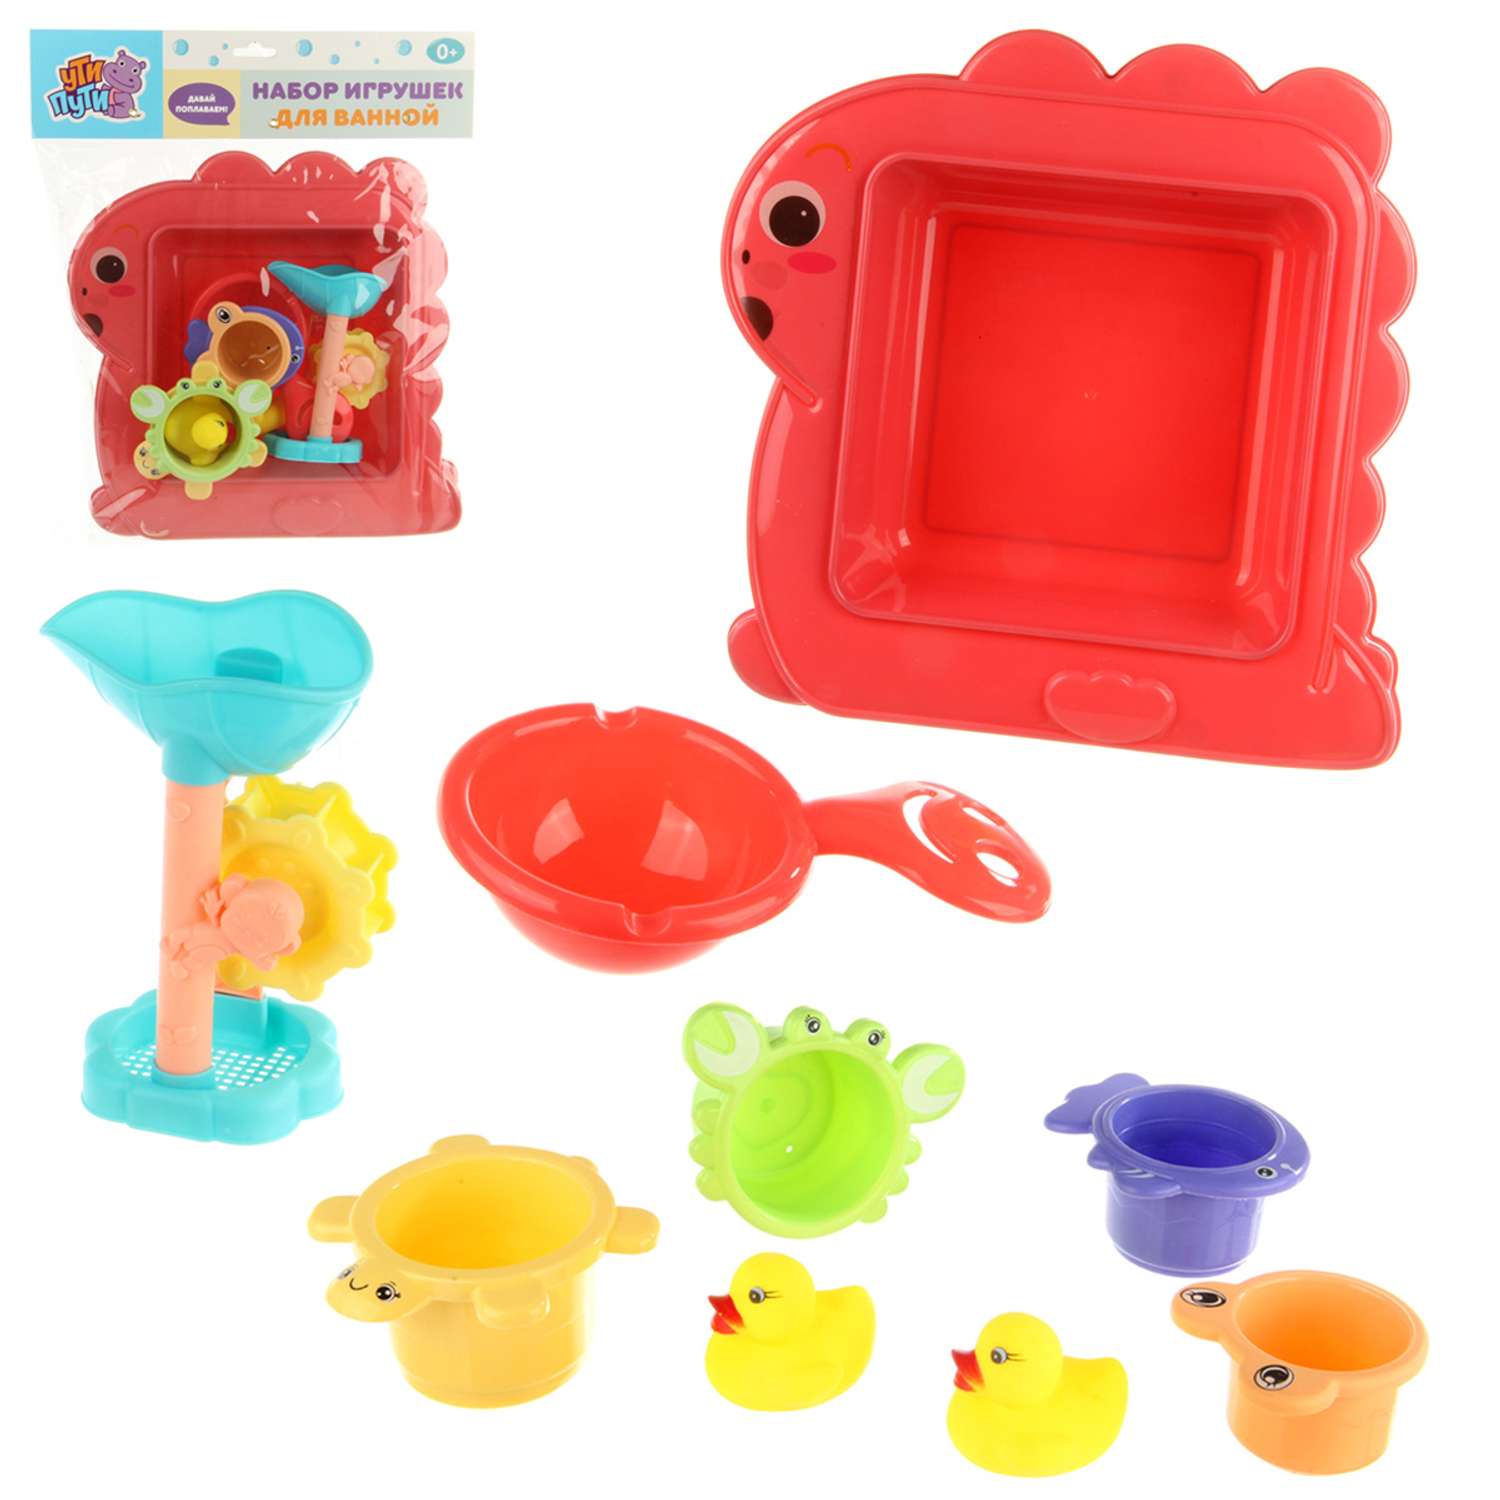 Игрушки для купания Ути Пути мельница и 7 предметов на подносе - фото 2